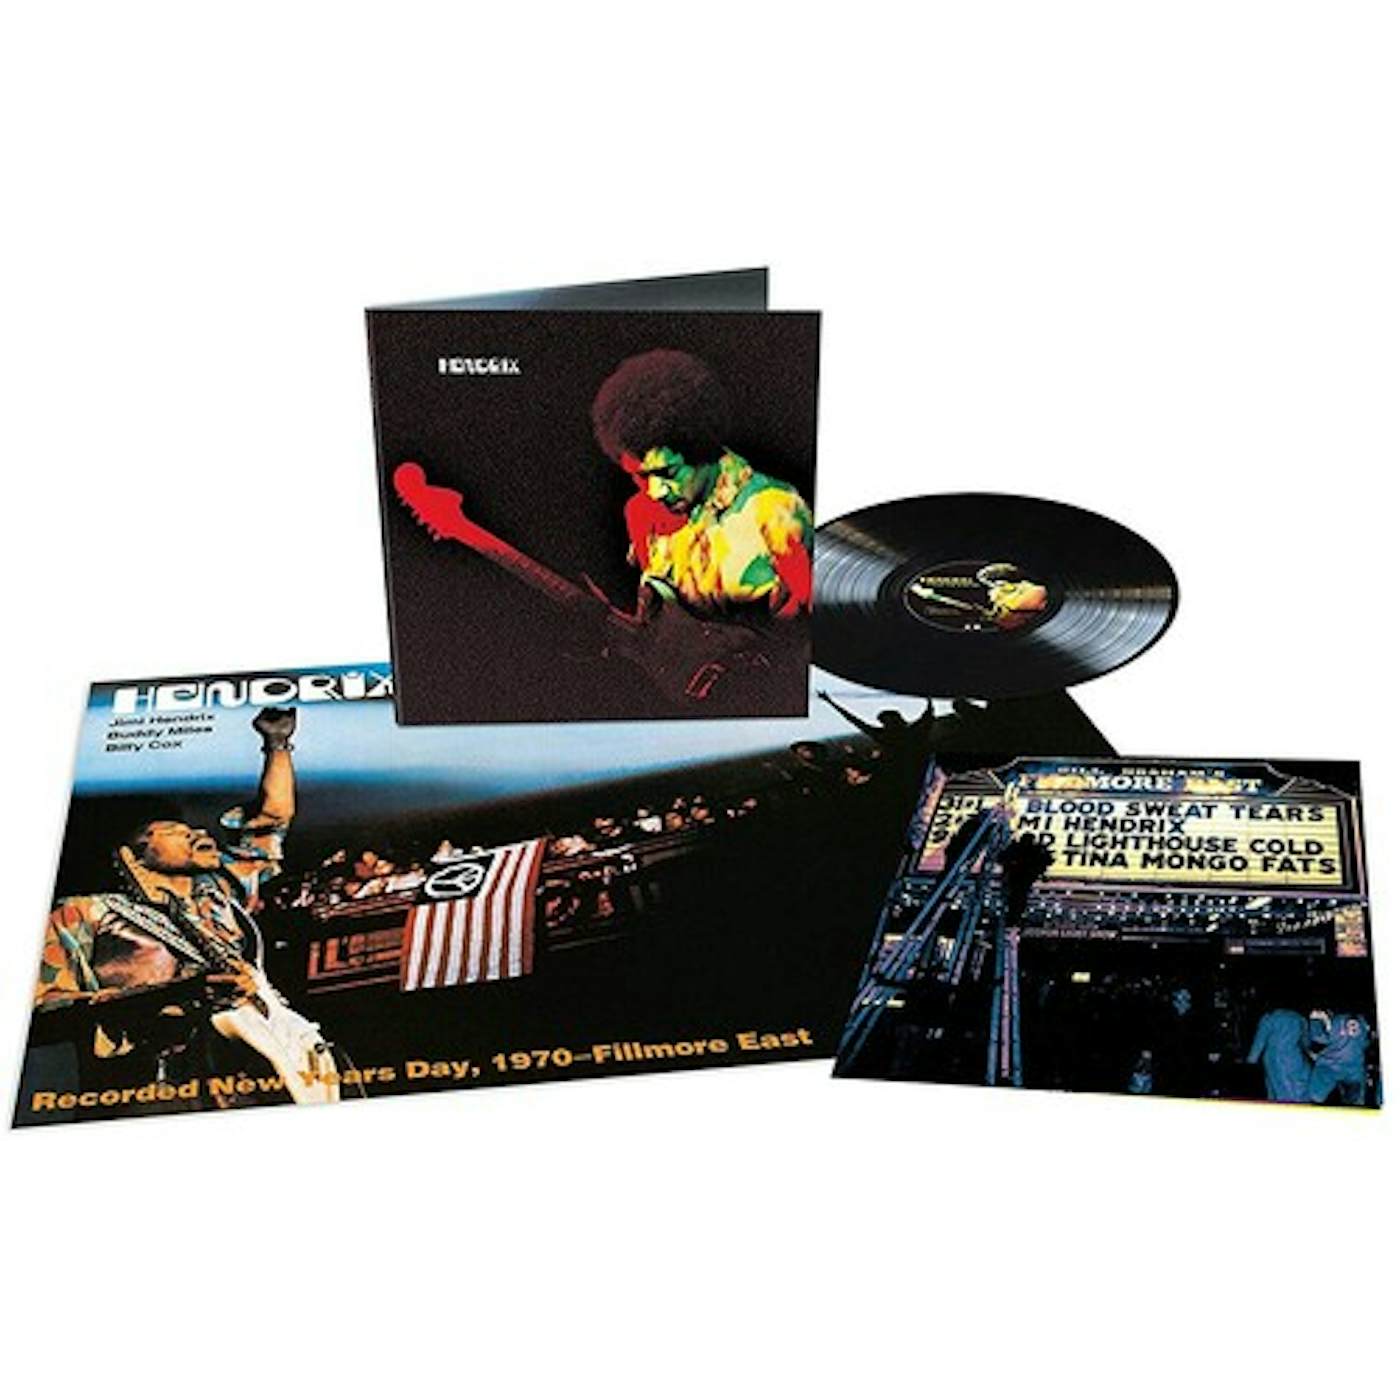 Jimi Hendrix Band Of Gypsys Vinyl Record